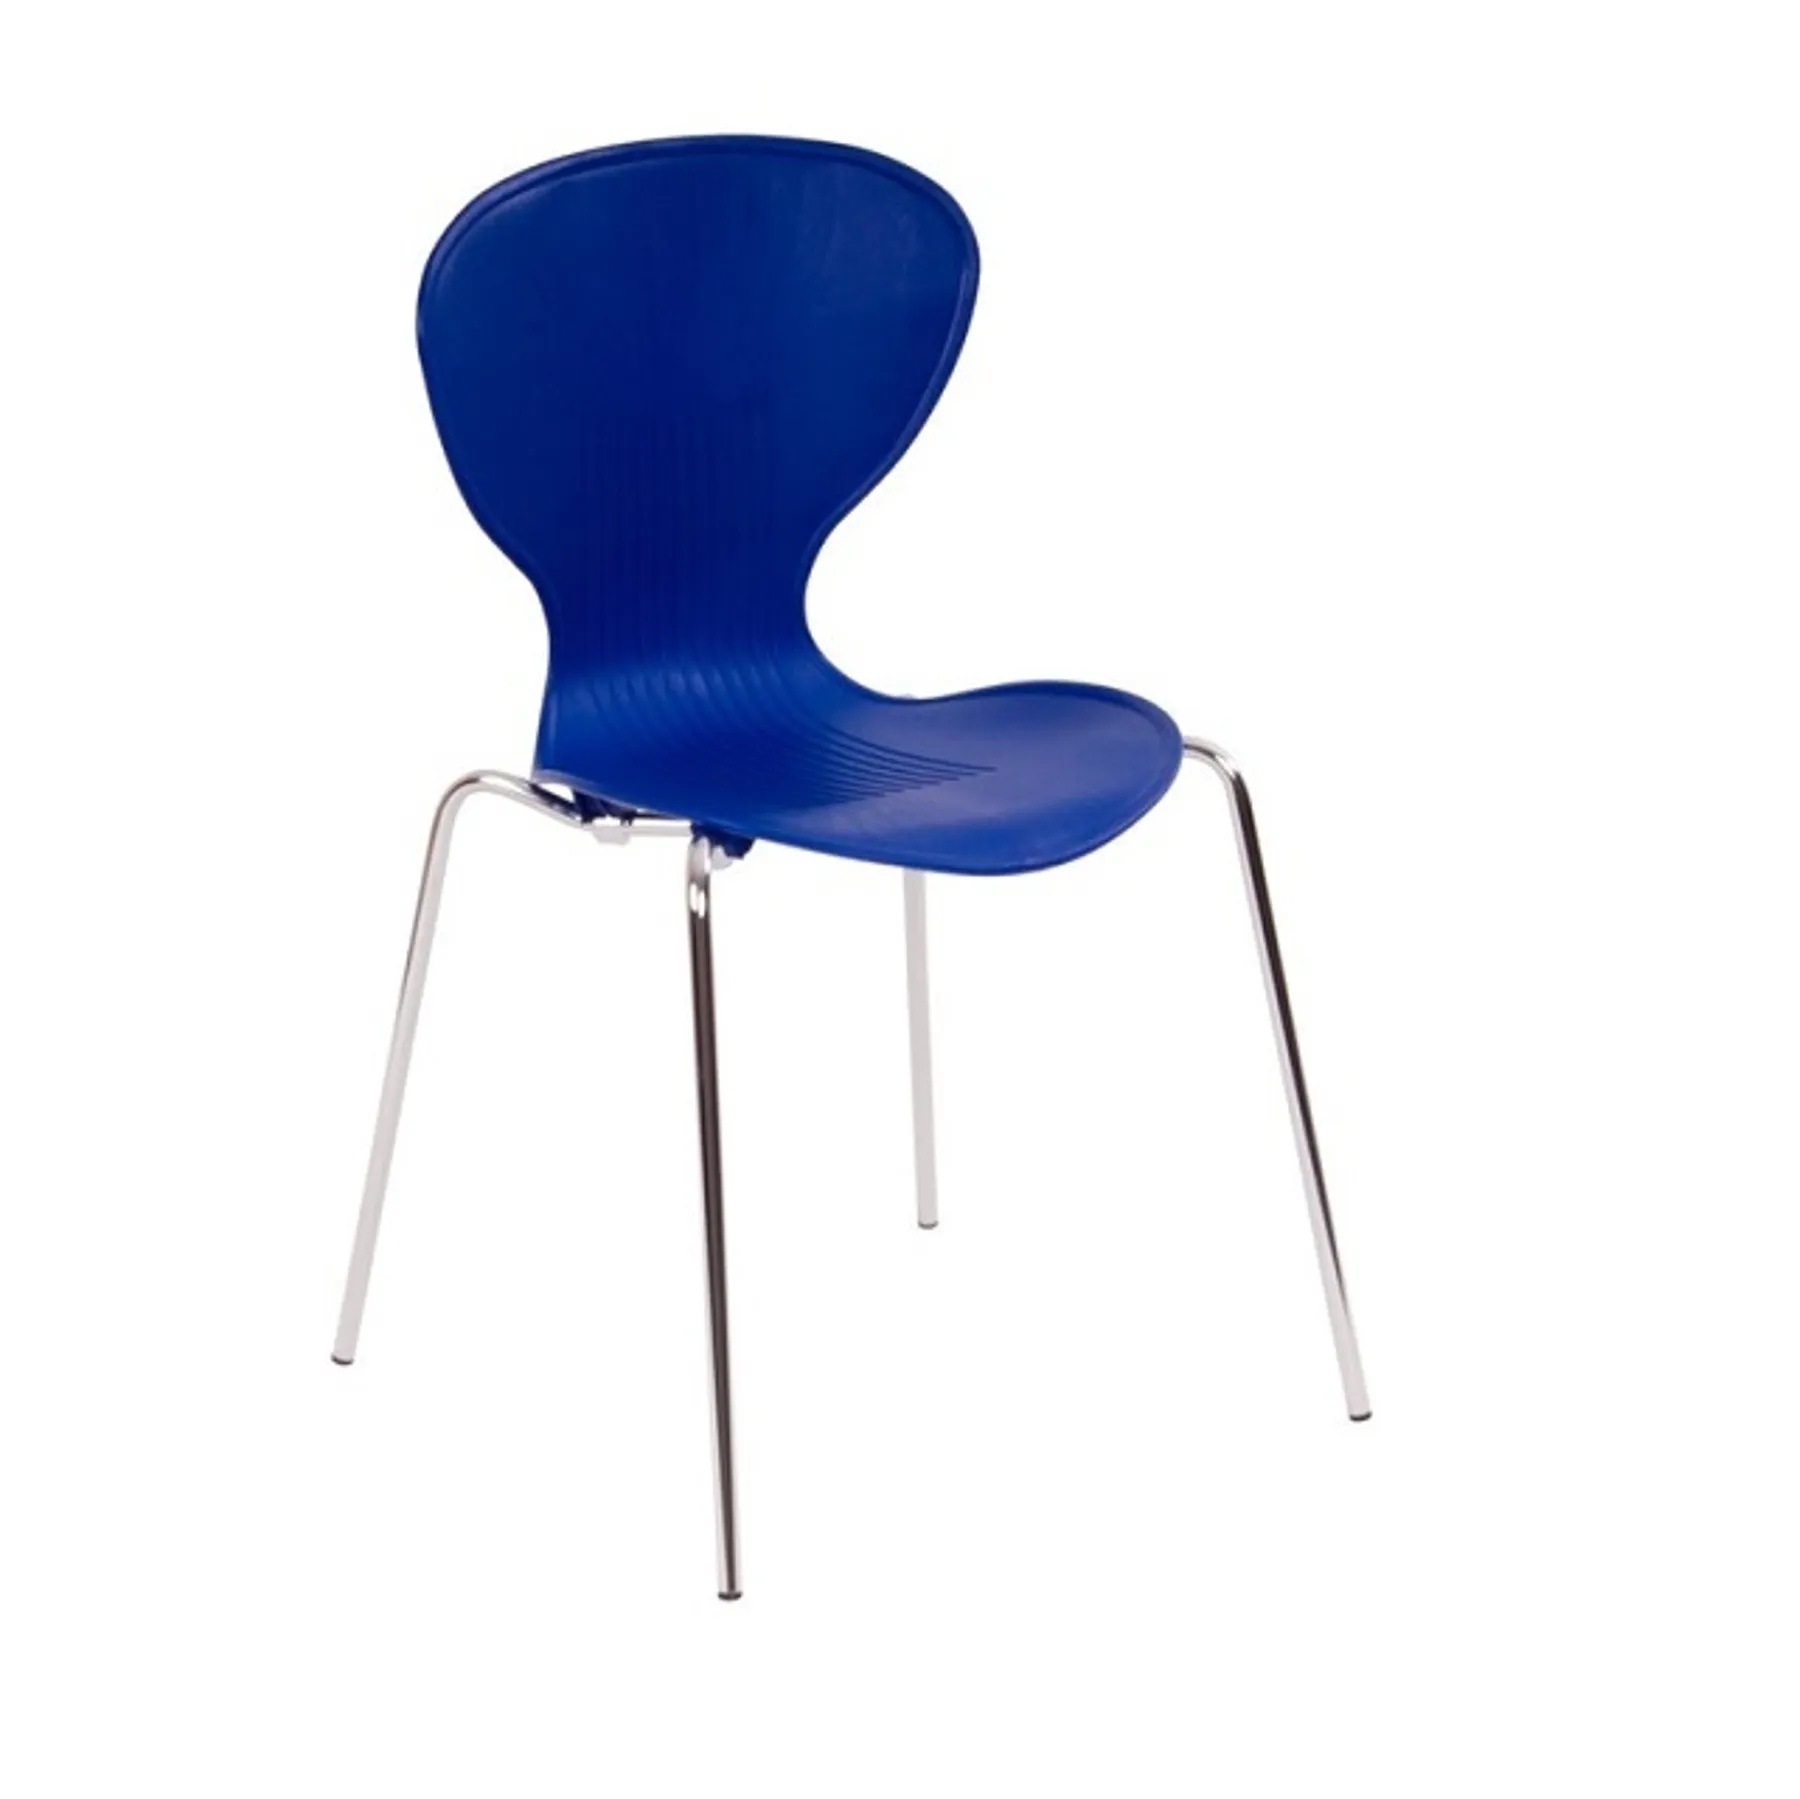 Lof direct Sven Christiansen XRC1 Plastic Cafe Chair Blue